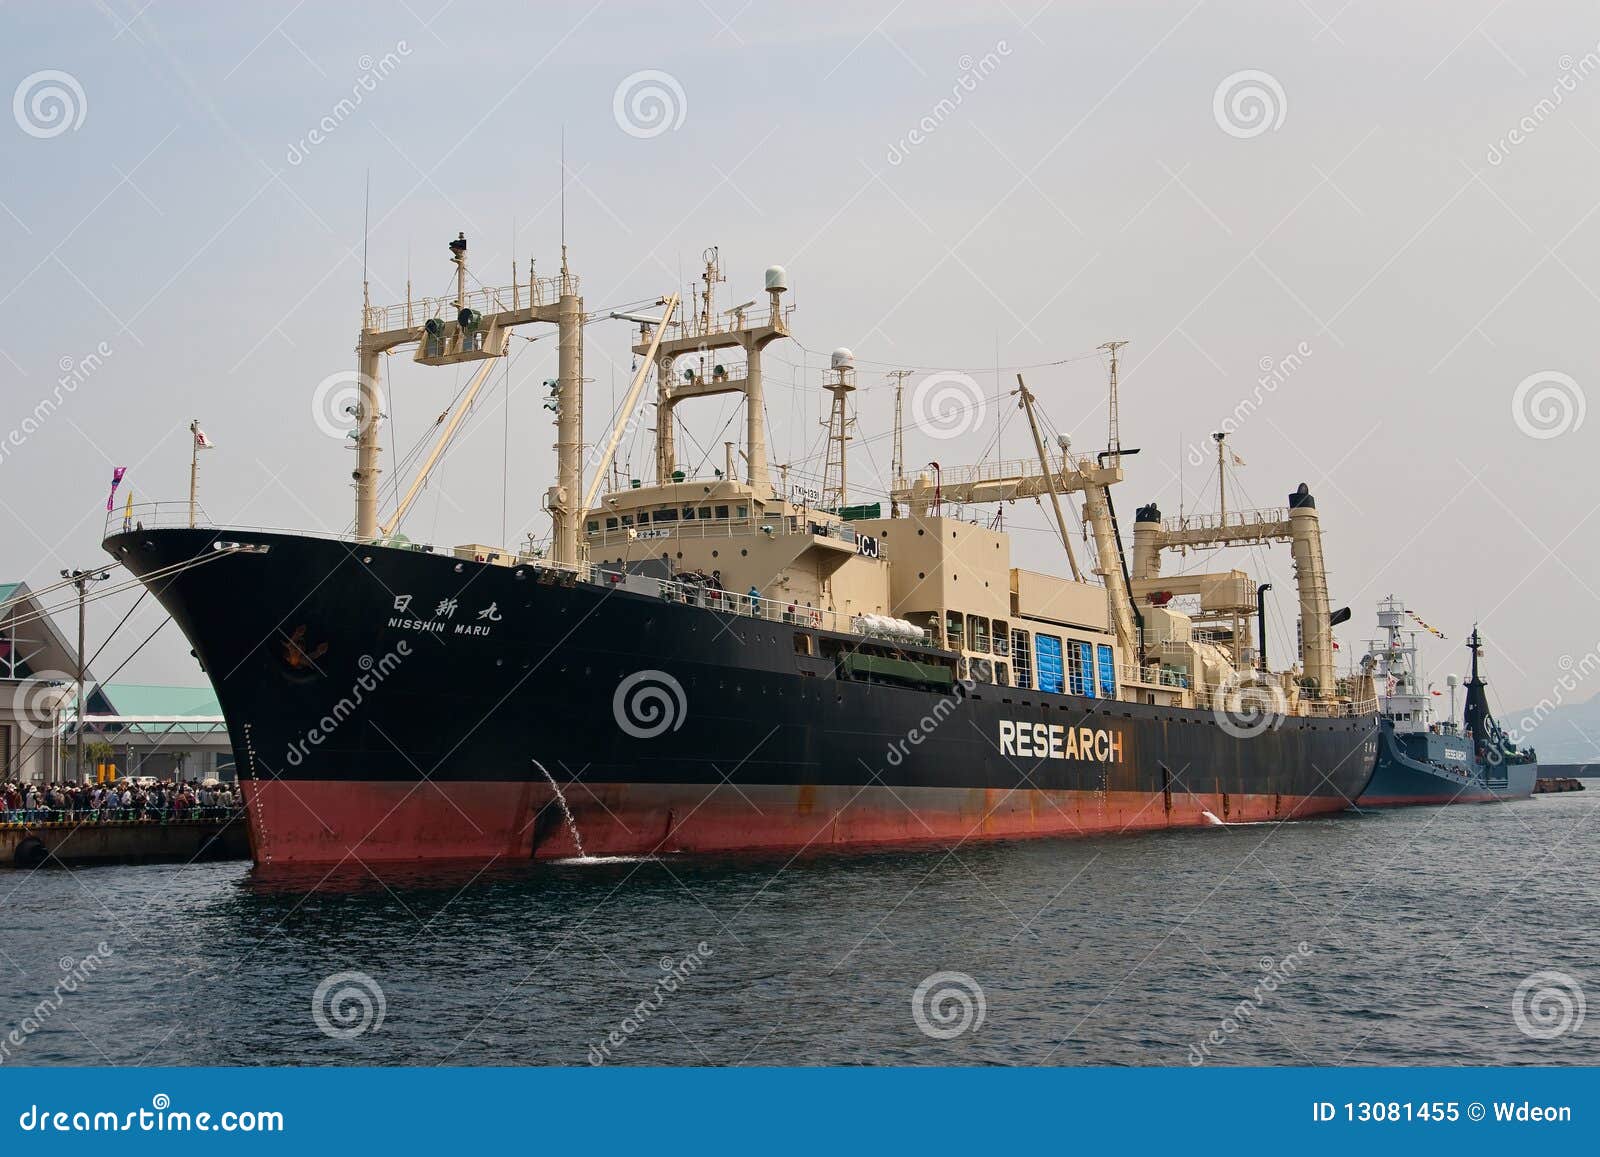 Japanese Whaling Ship Nisshin Maru Editorial Image - Image ...